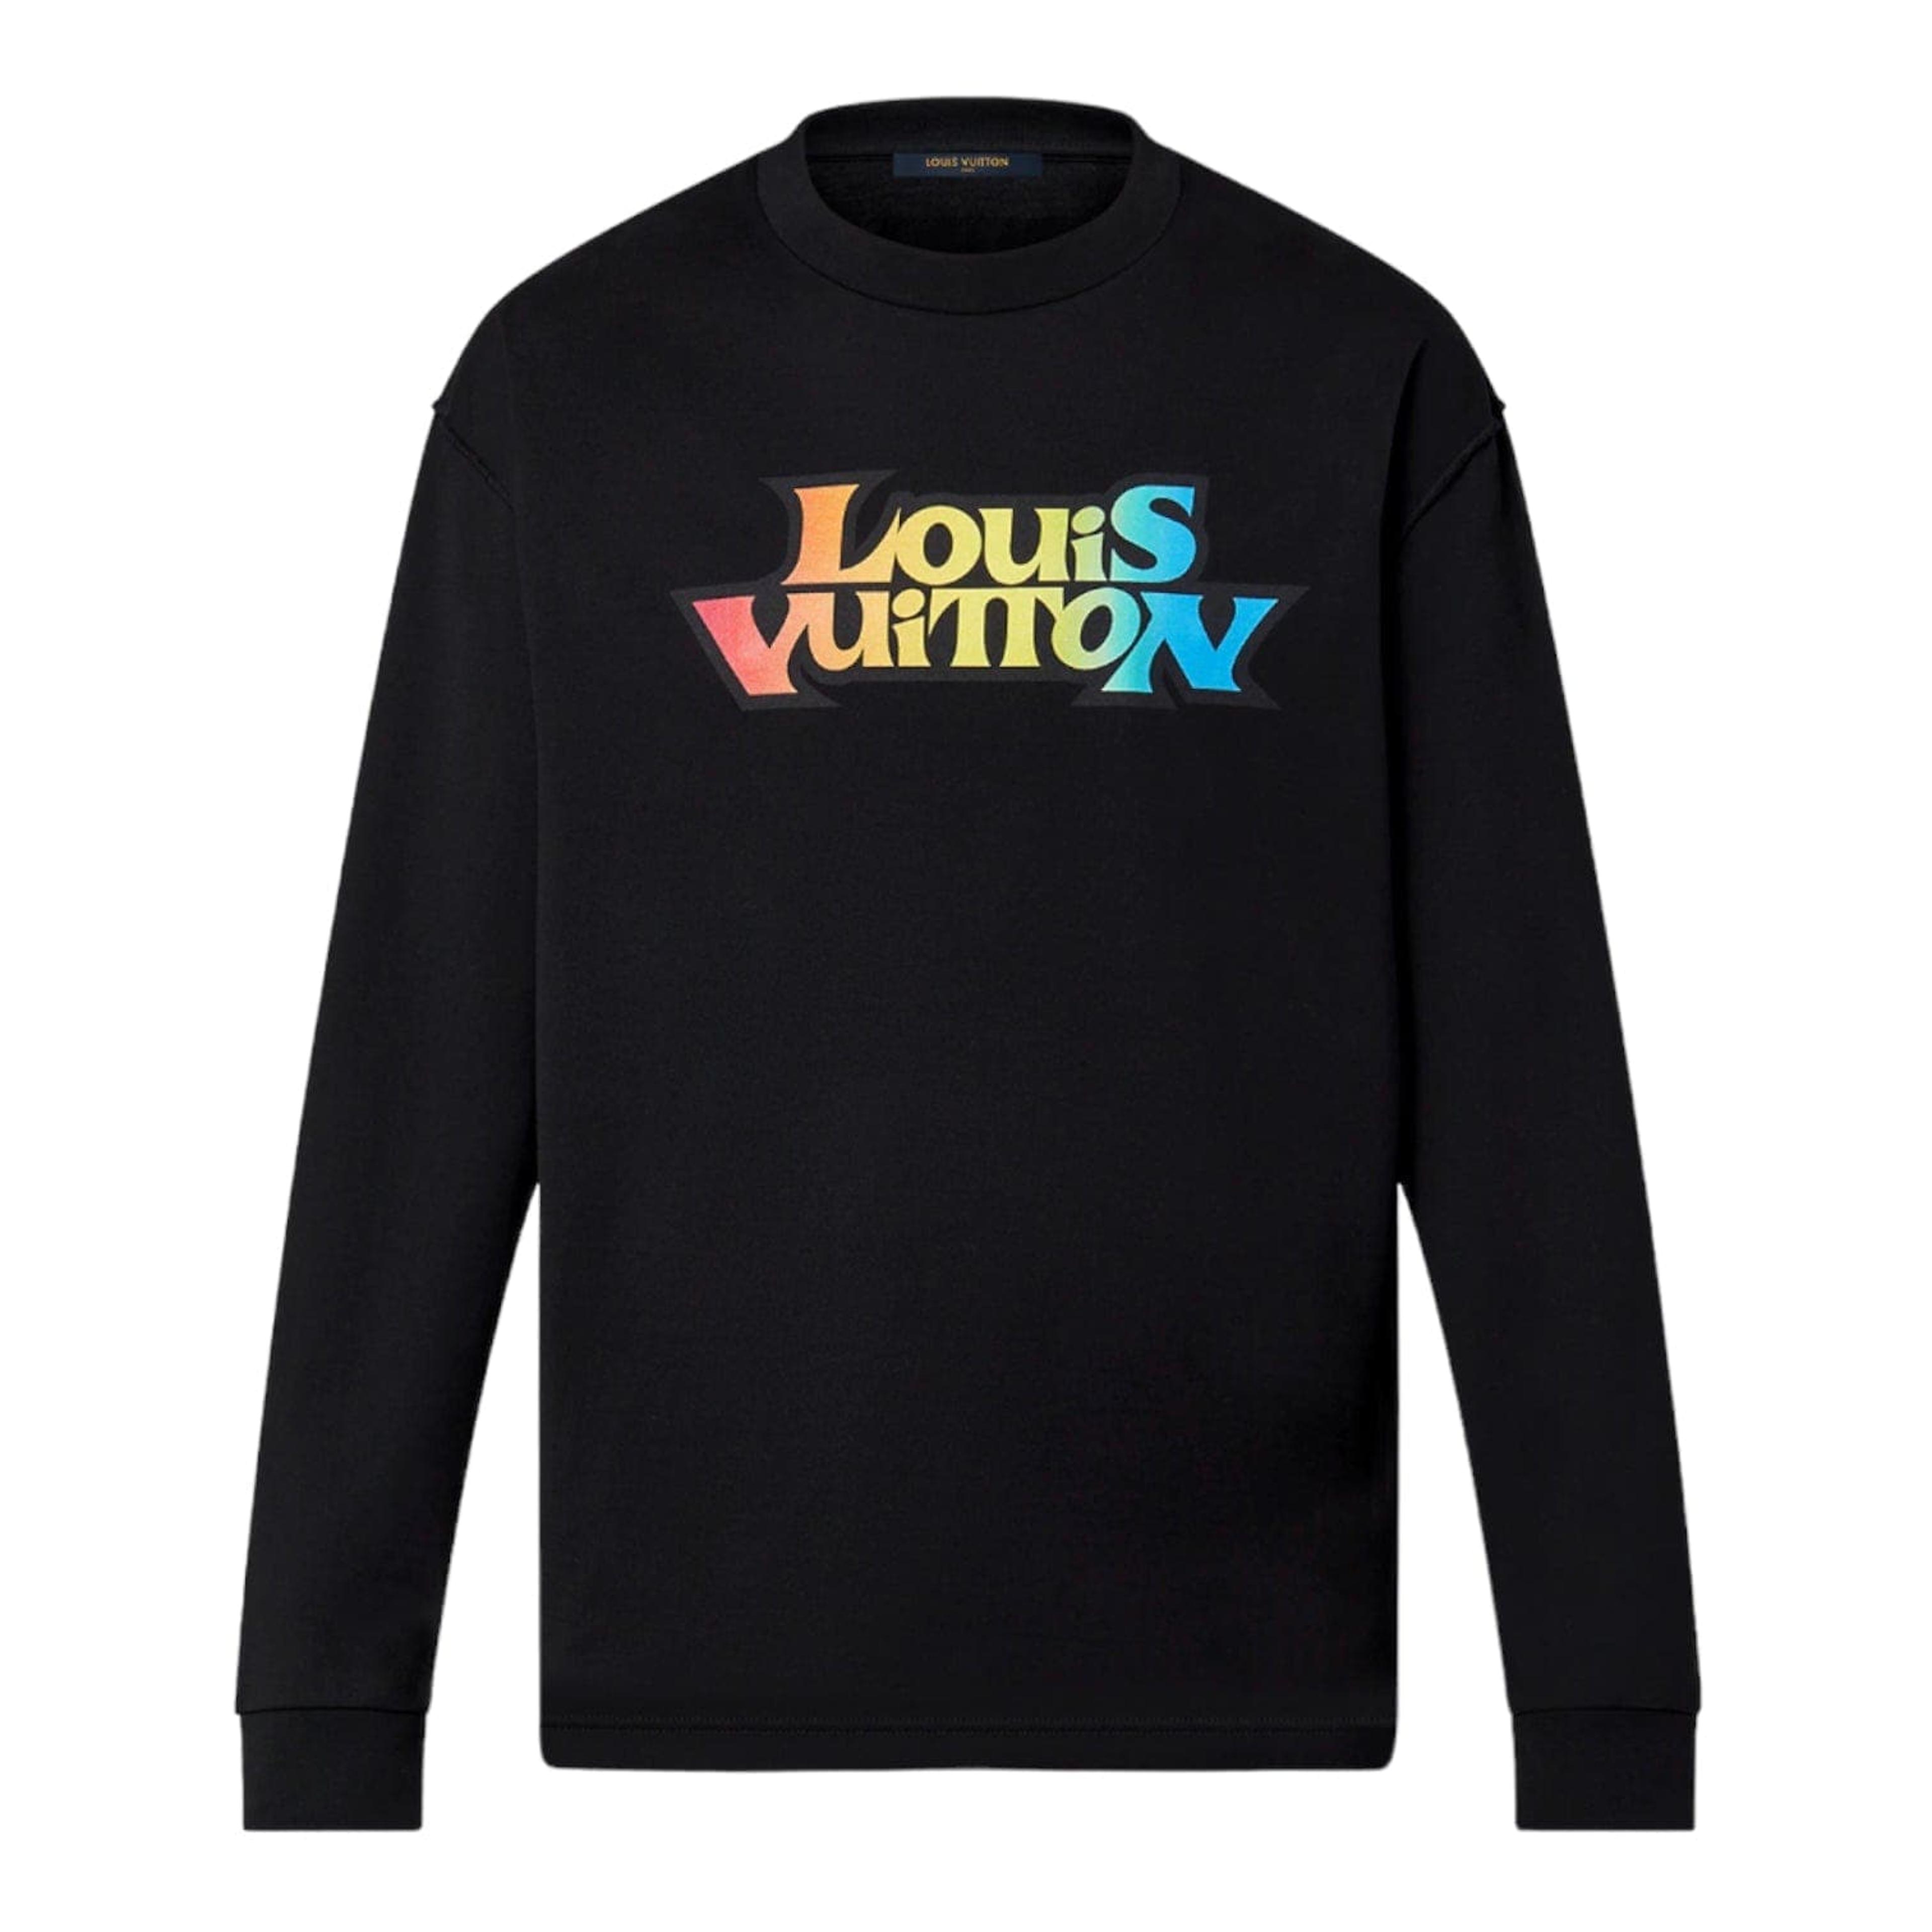 Louis Vuitton Fade Printed Long Sleeve Tee Shirt Black